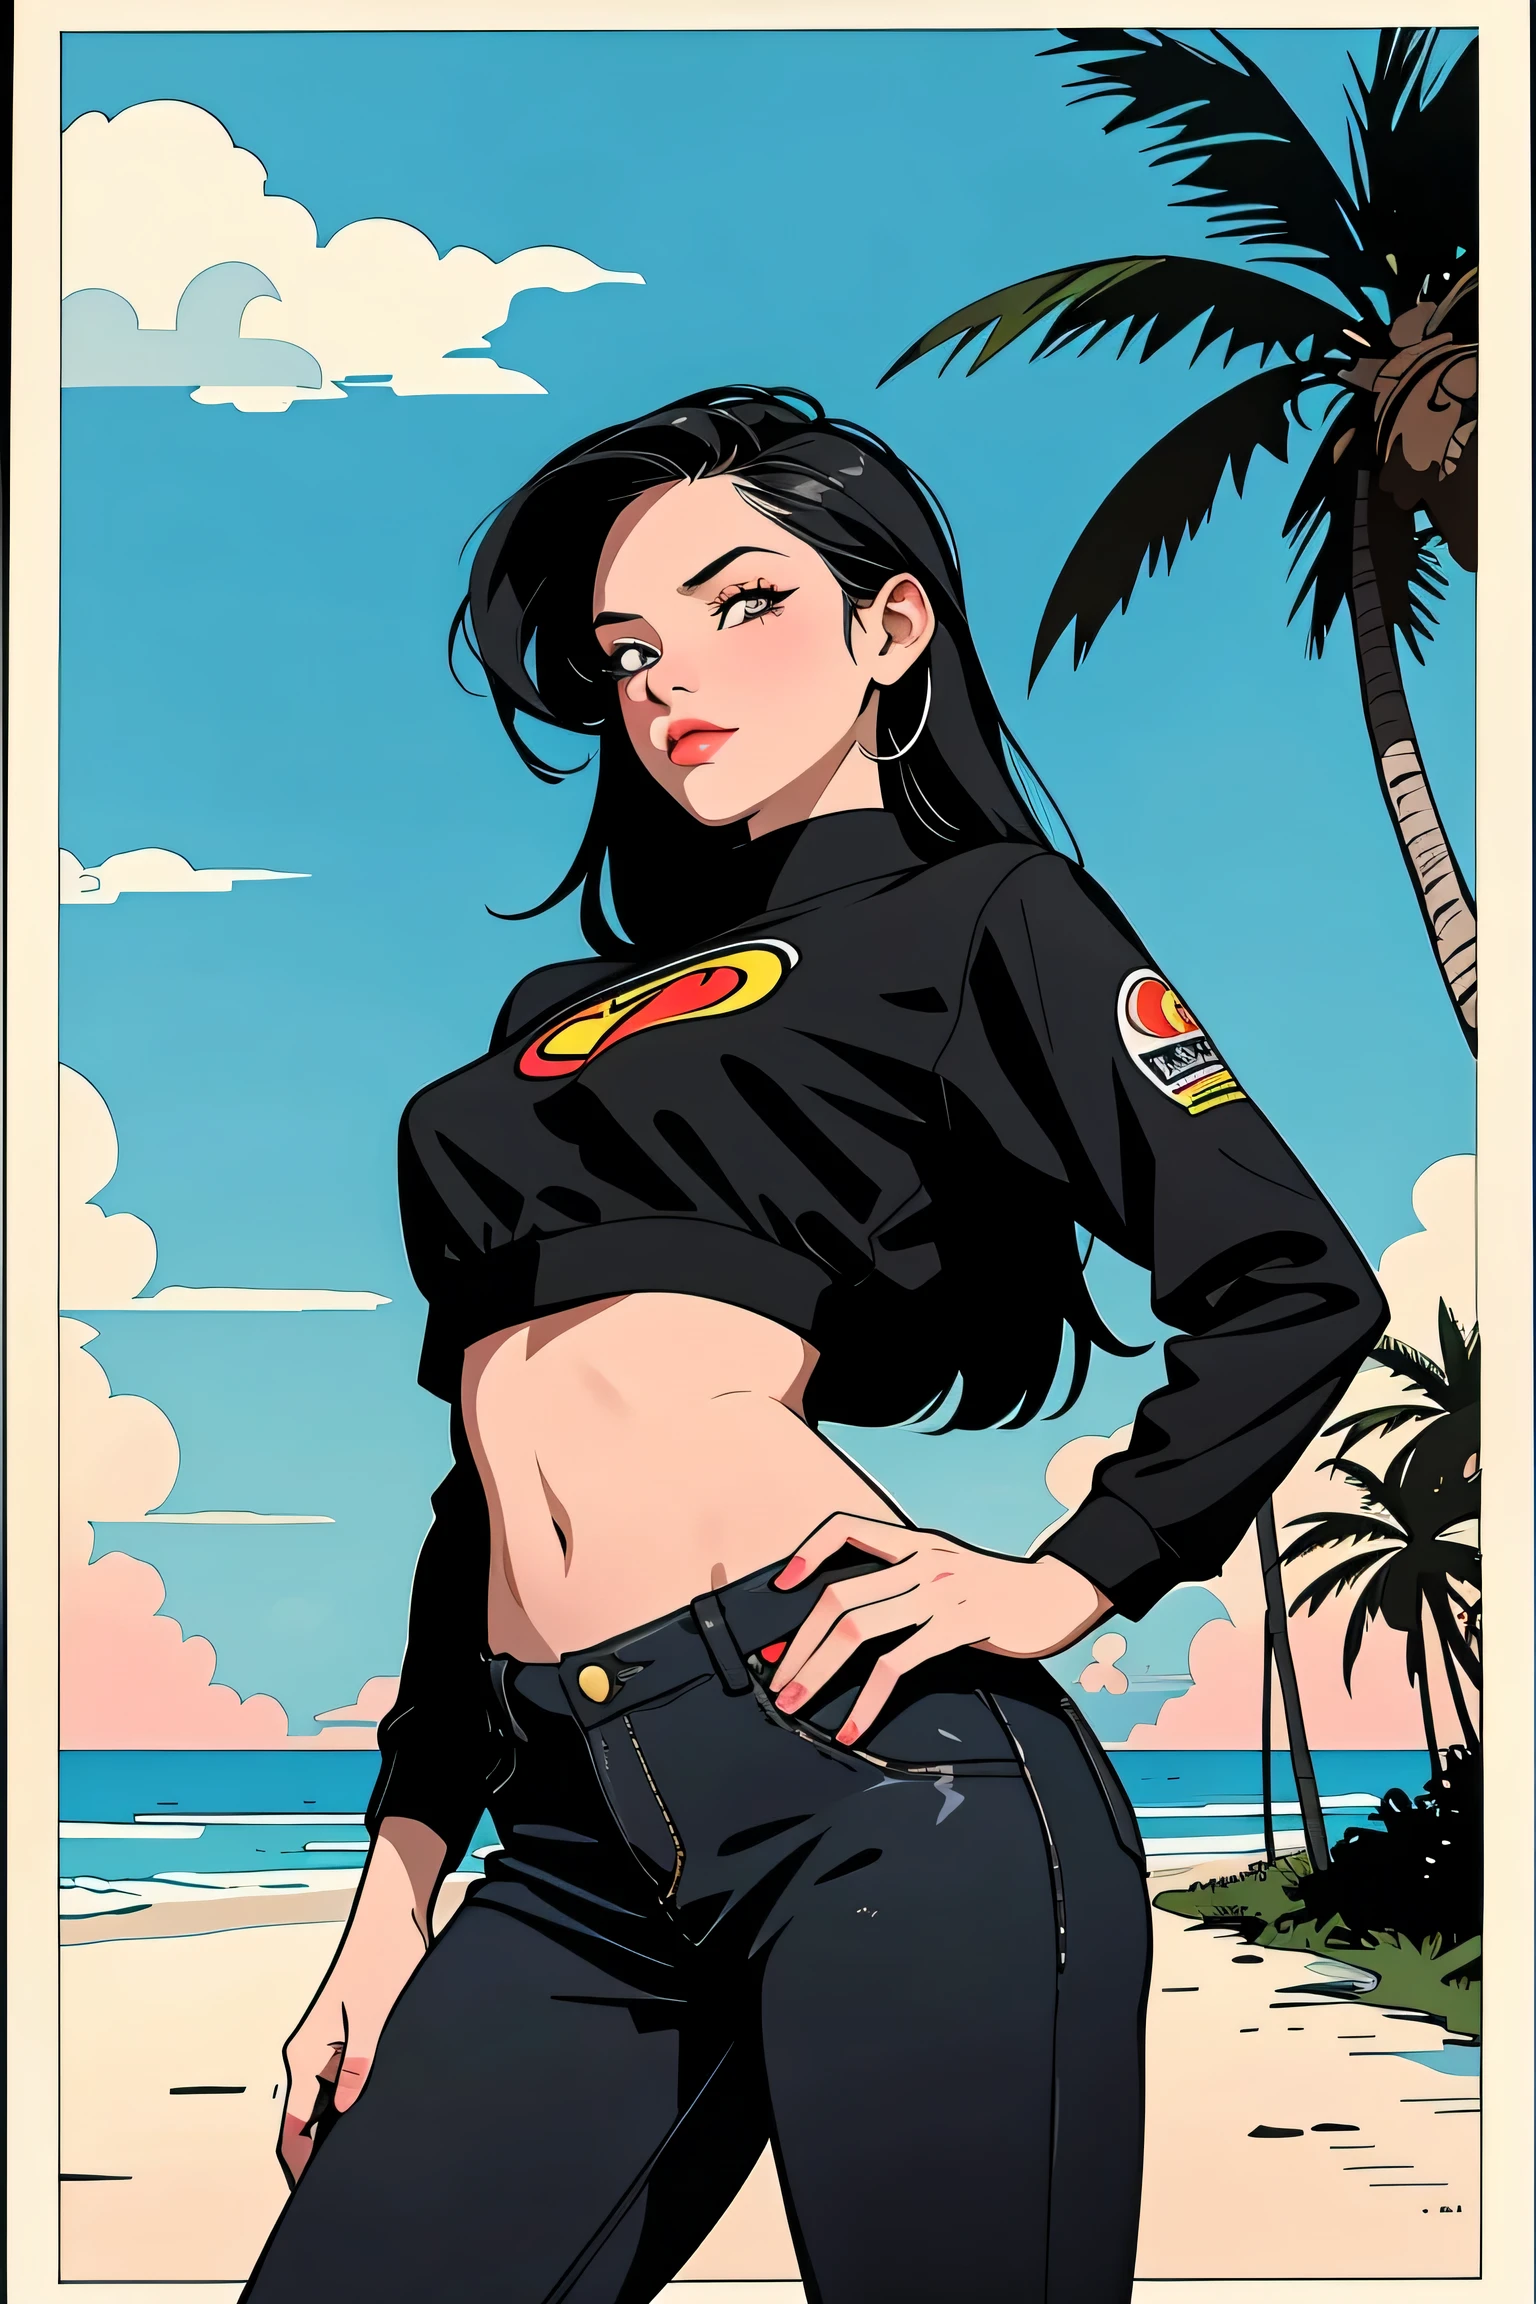 retro girl, Miami, sunset, Ferrari, palm tree, 90's, (flat colors, flat texture, lineart:1.2), graphical design, (heavy ink, ink blacks), 